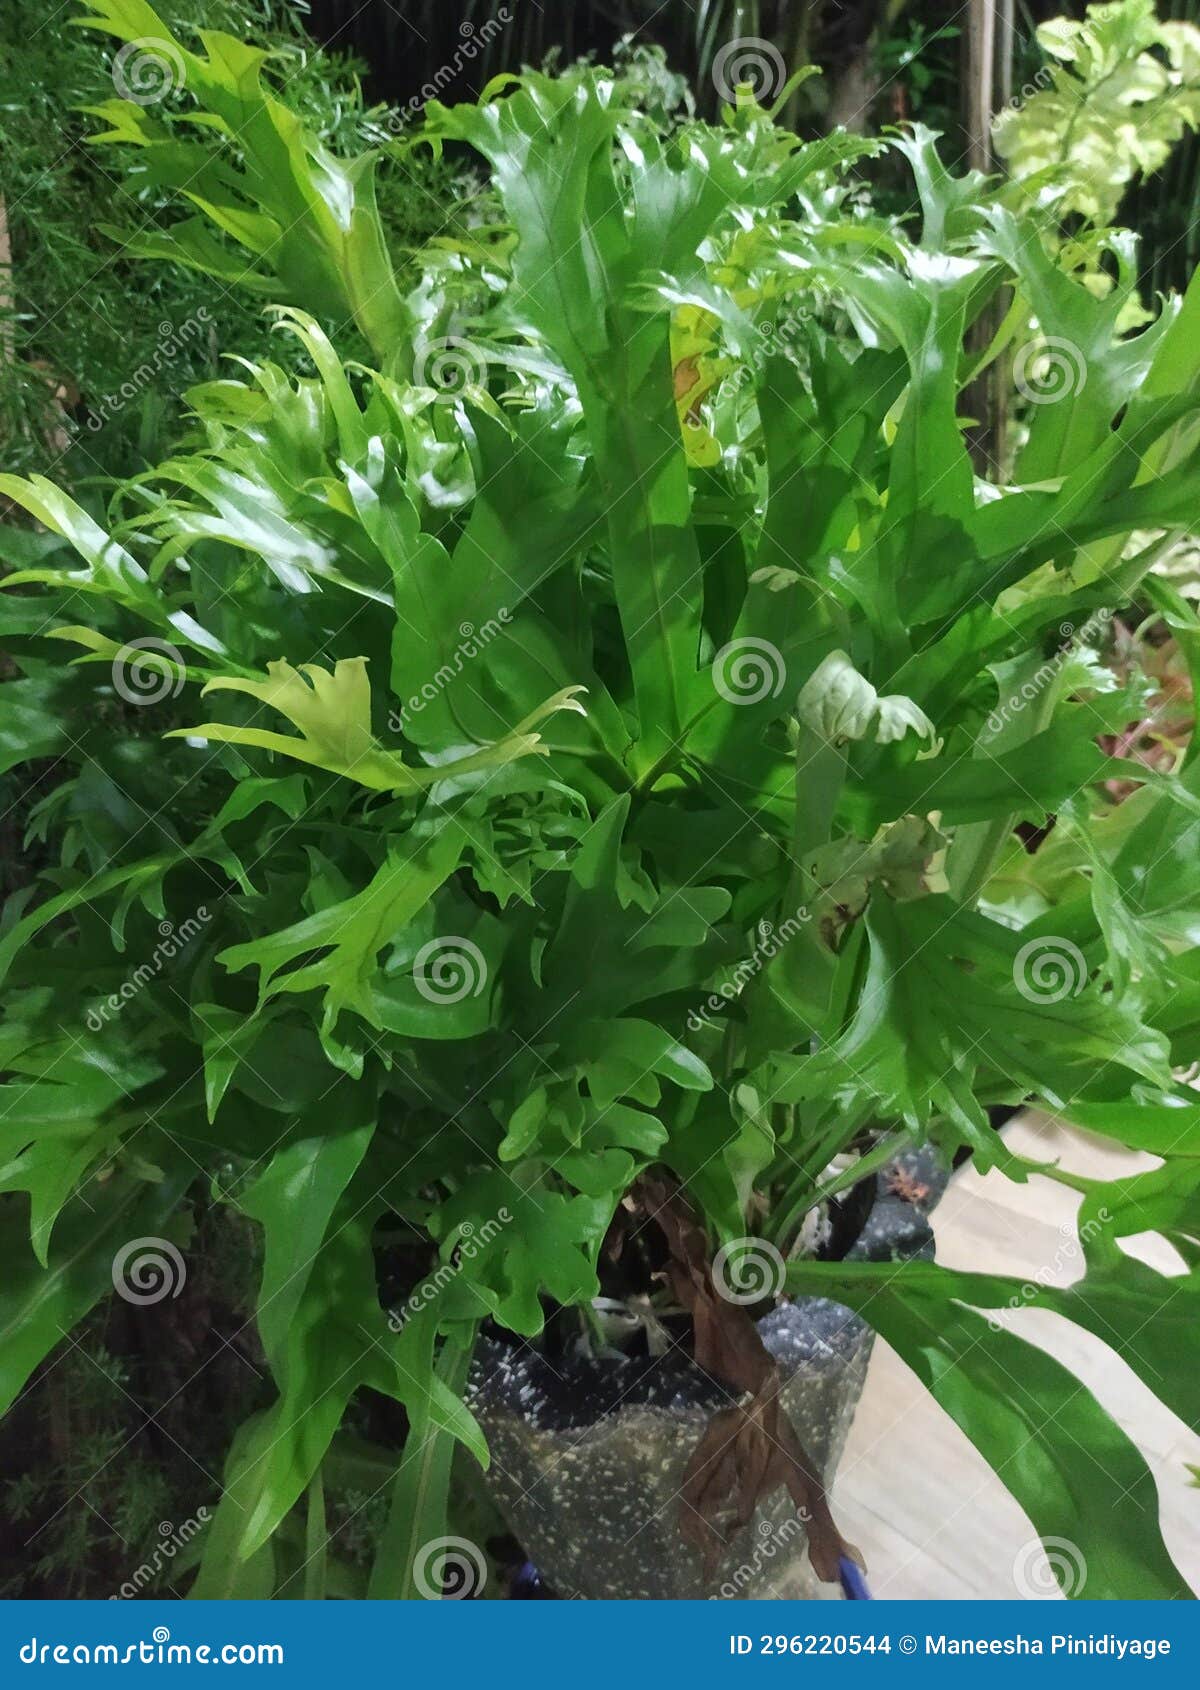 wisithuru plant & x28;mizuna o mostaza japonesa& x29;  sri lanka